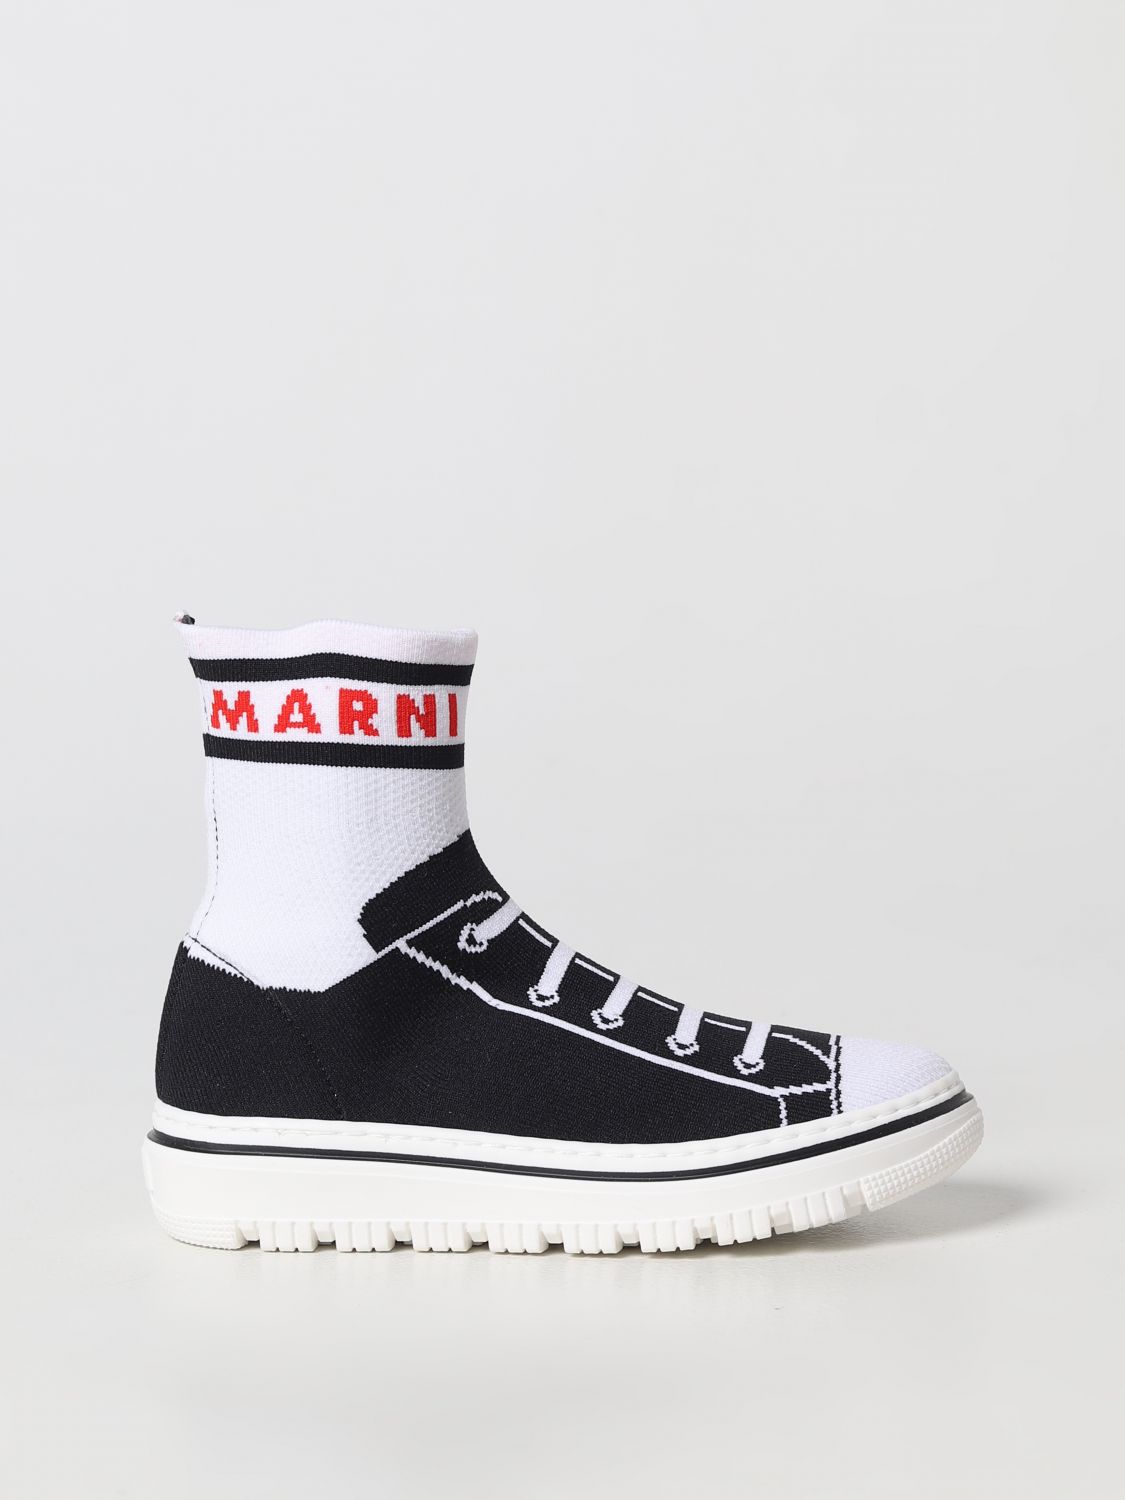 Marni Kids' Multicolor Sneakers For Boy In Black